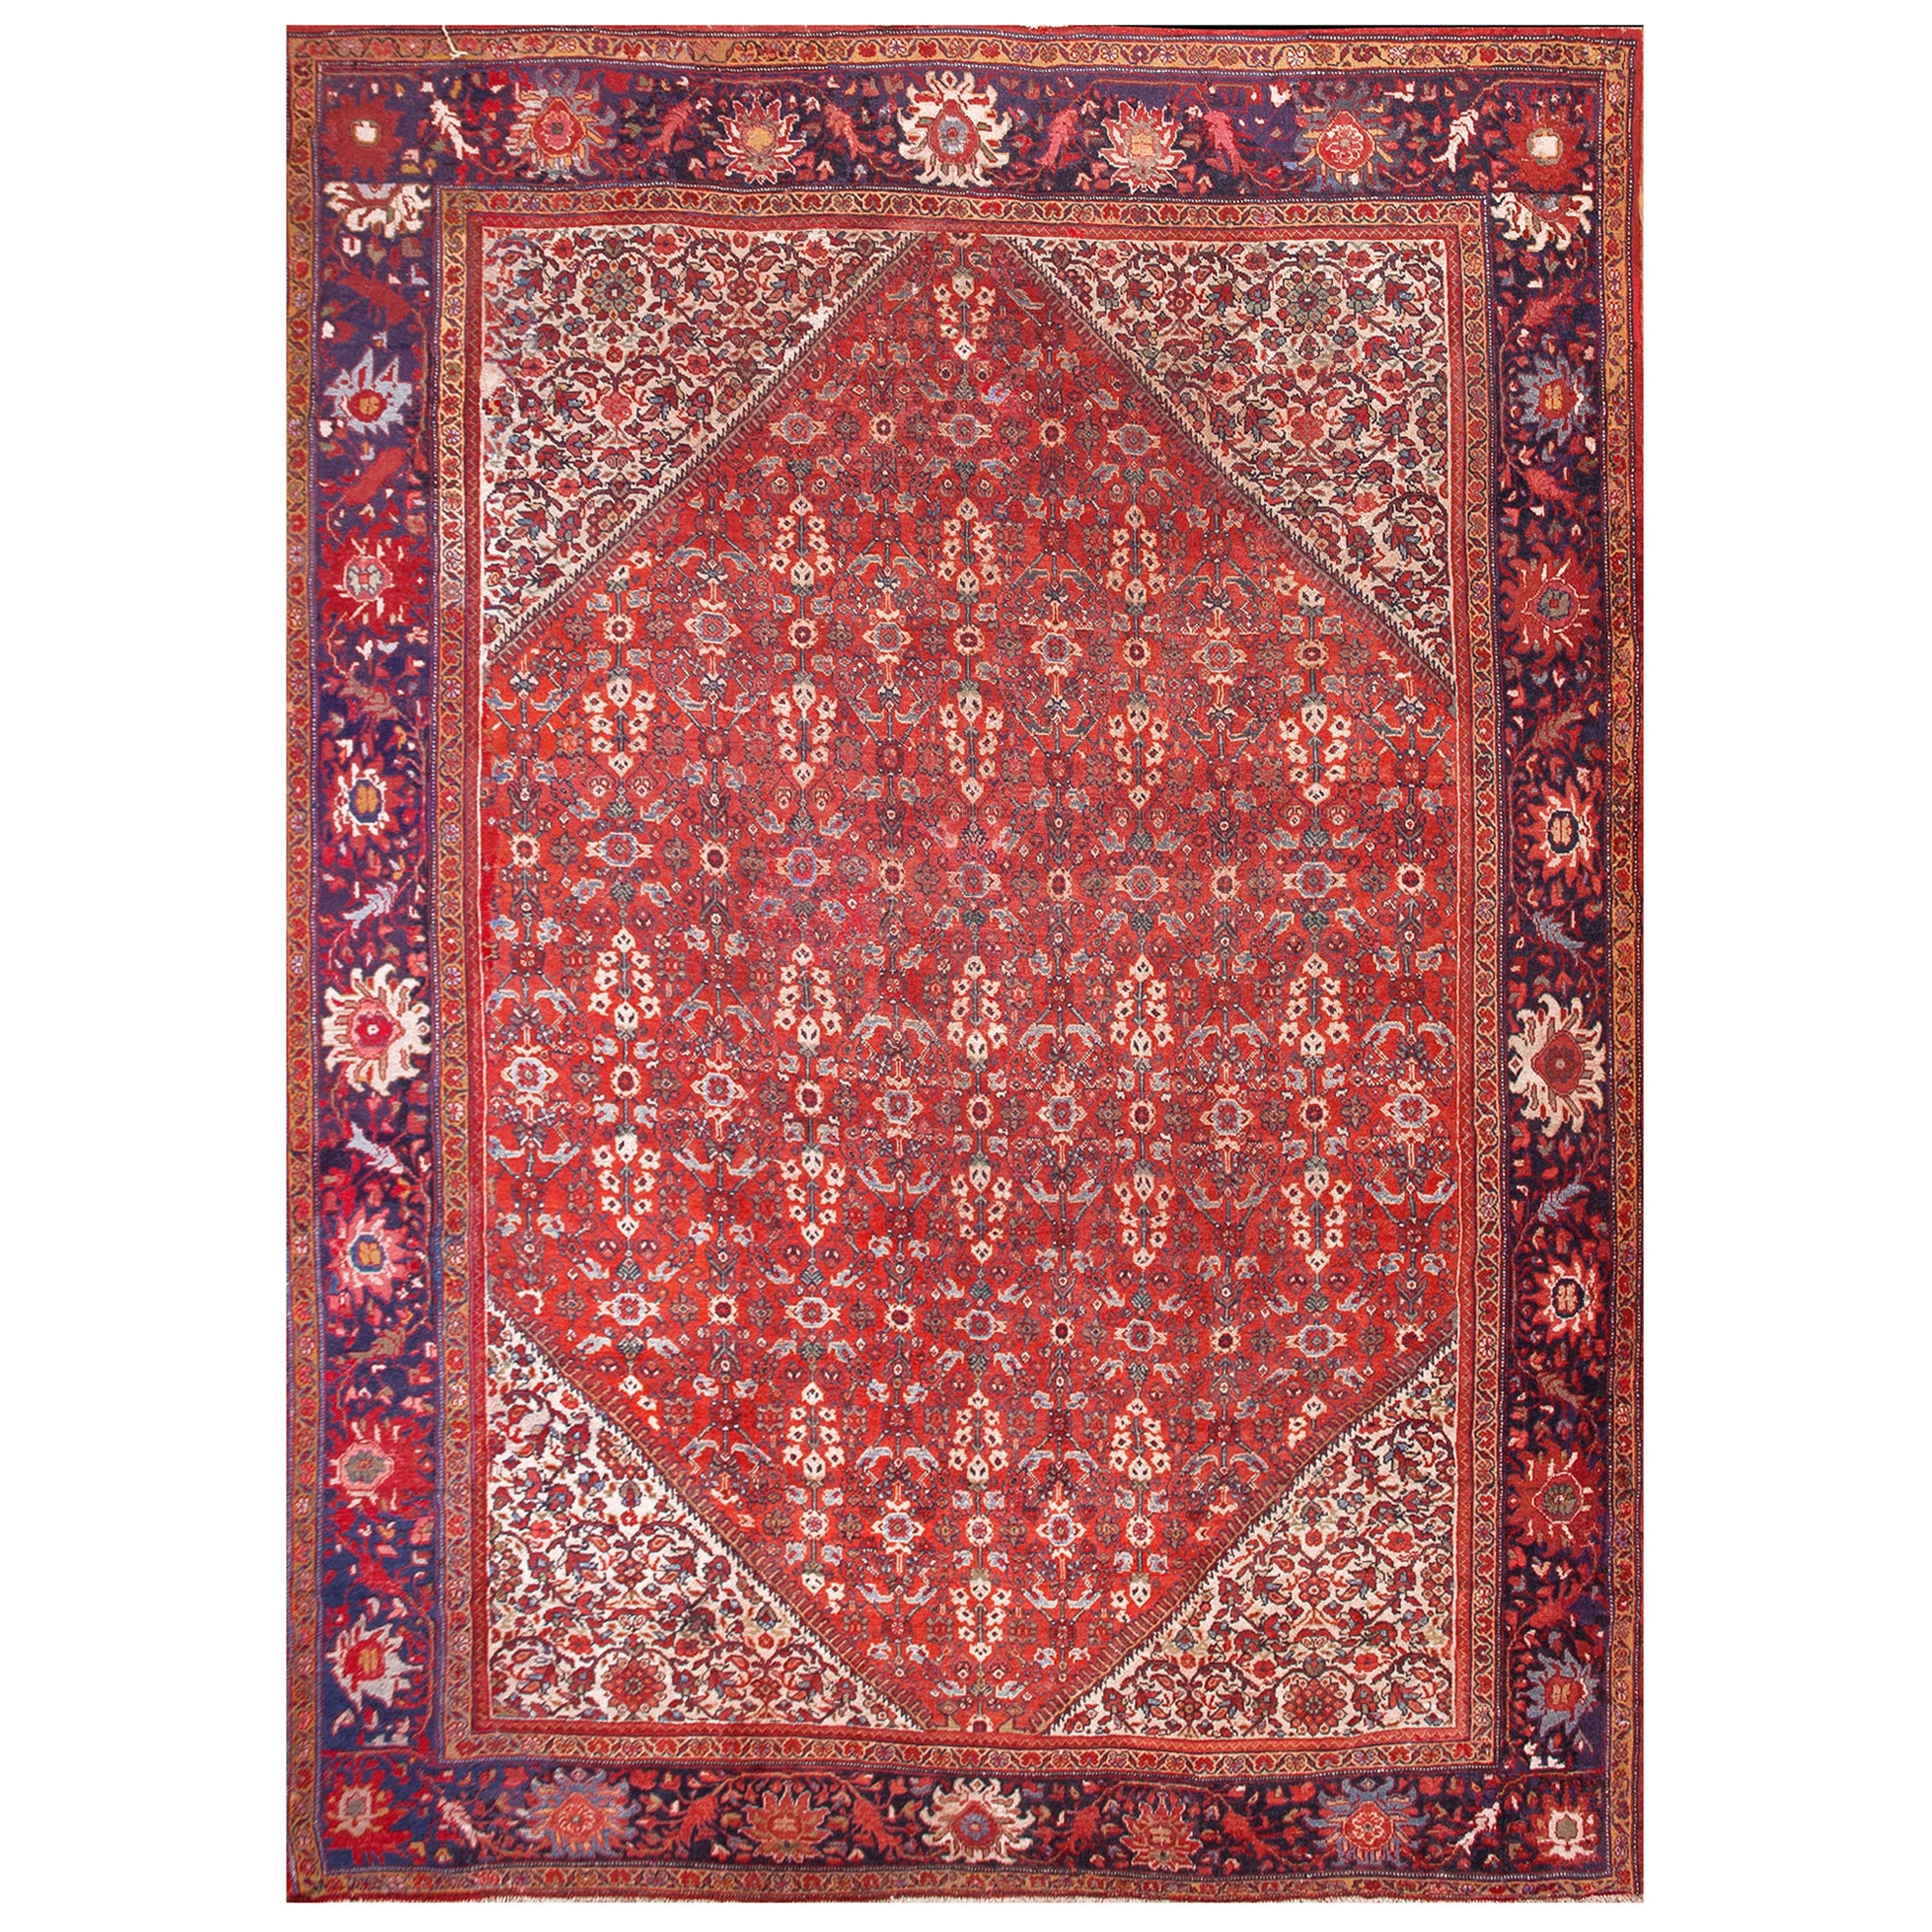 1930s Persian Mahal Carpet ( 10'3'' x 13'5'' - 312 x 408 cm )